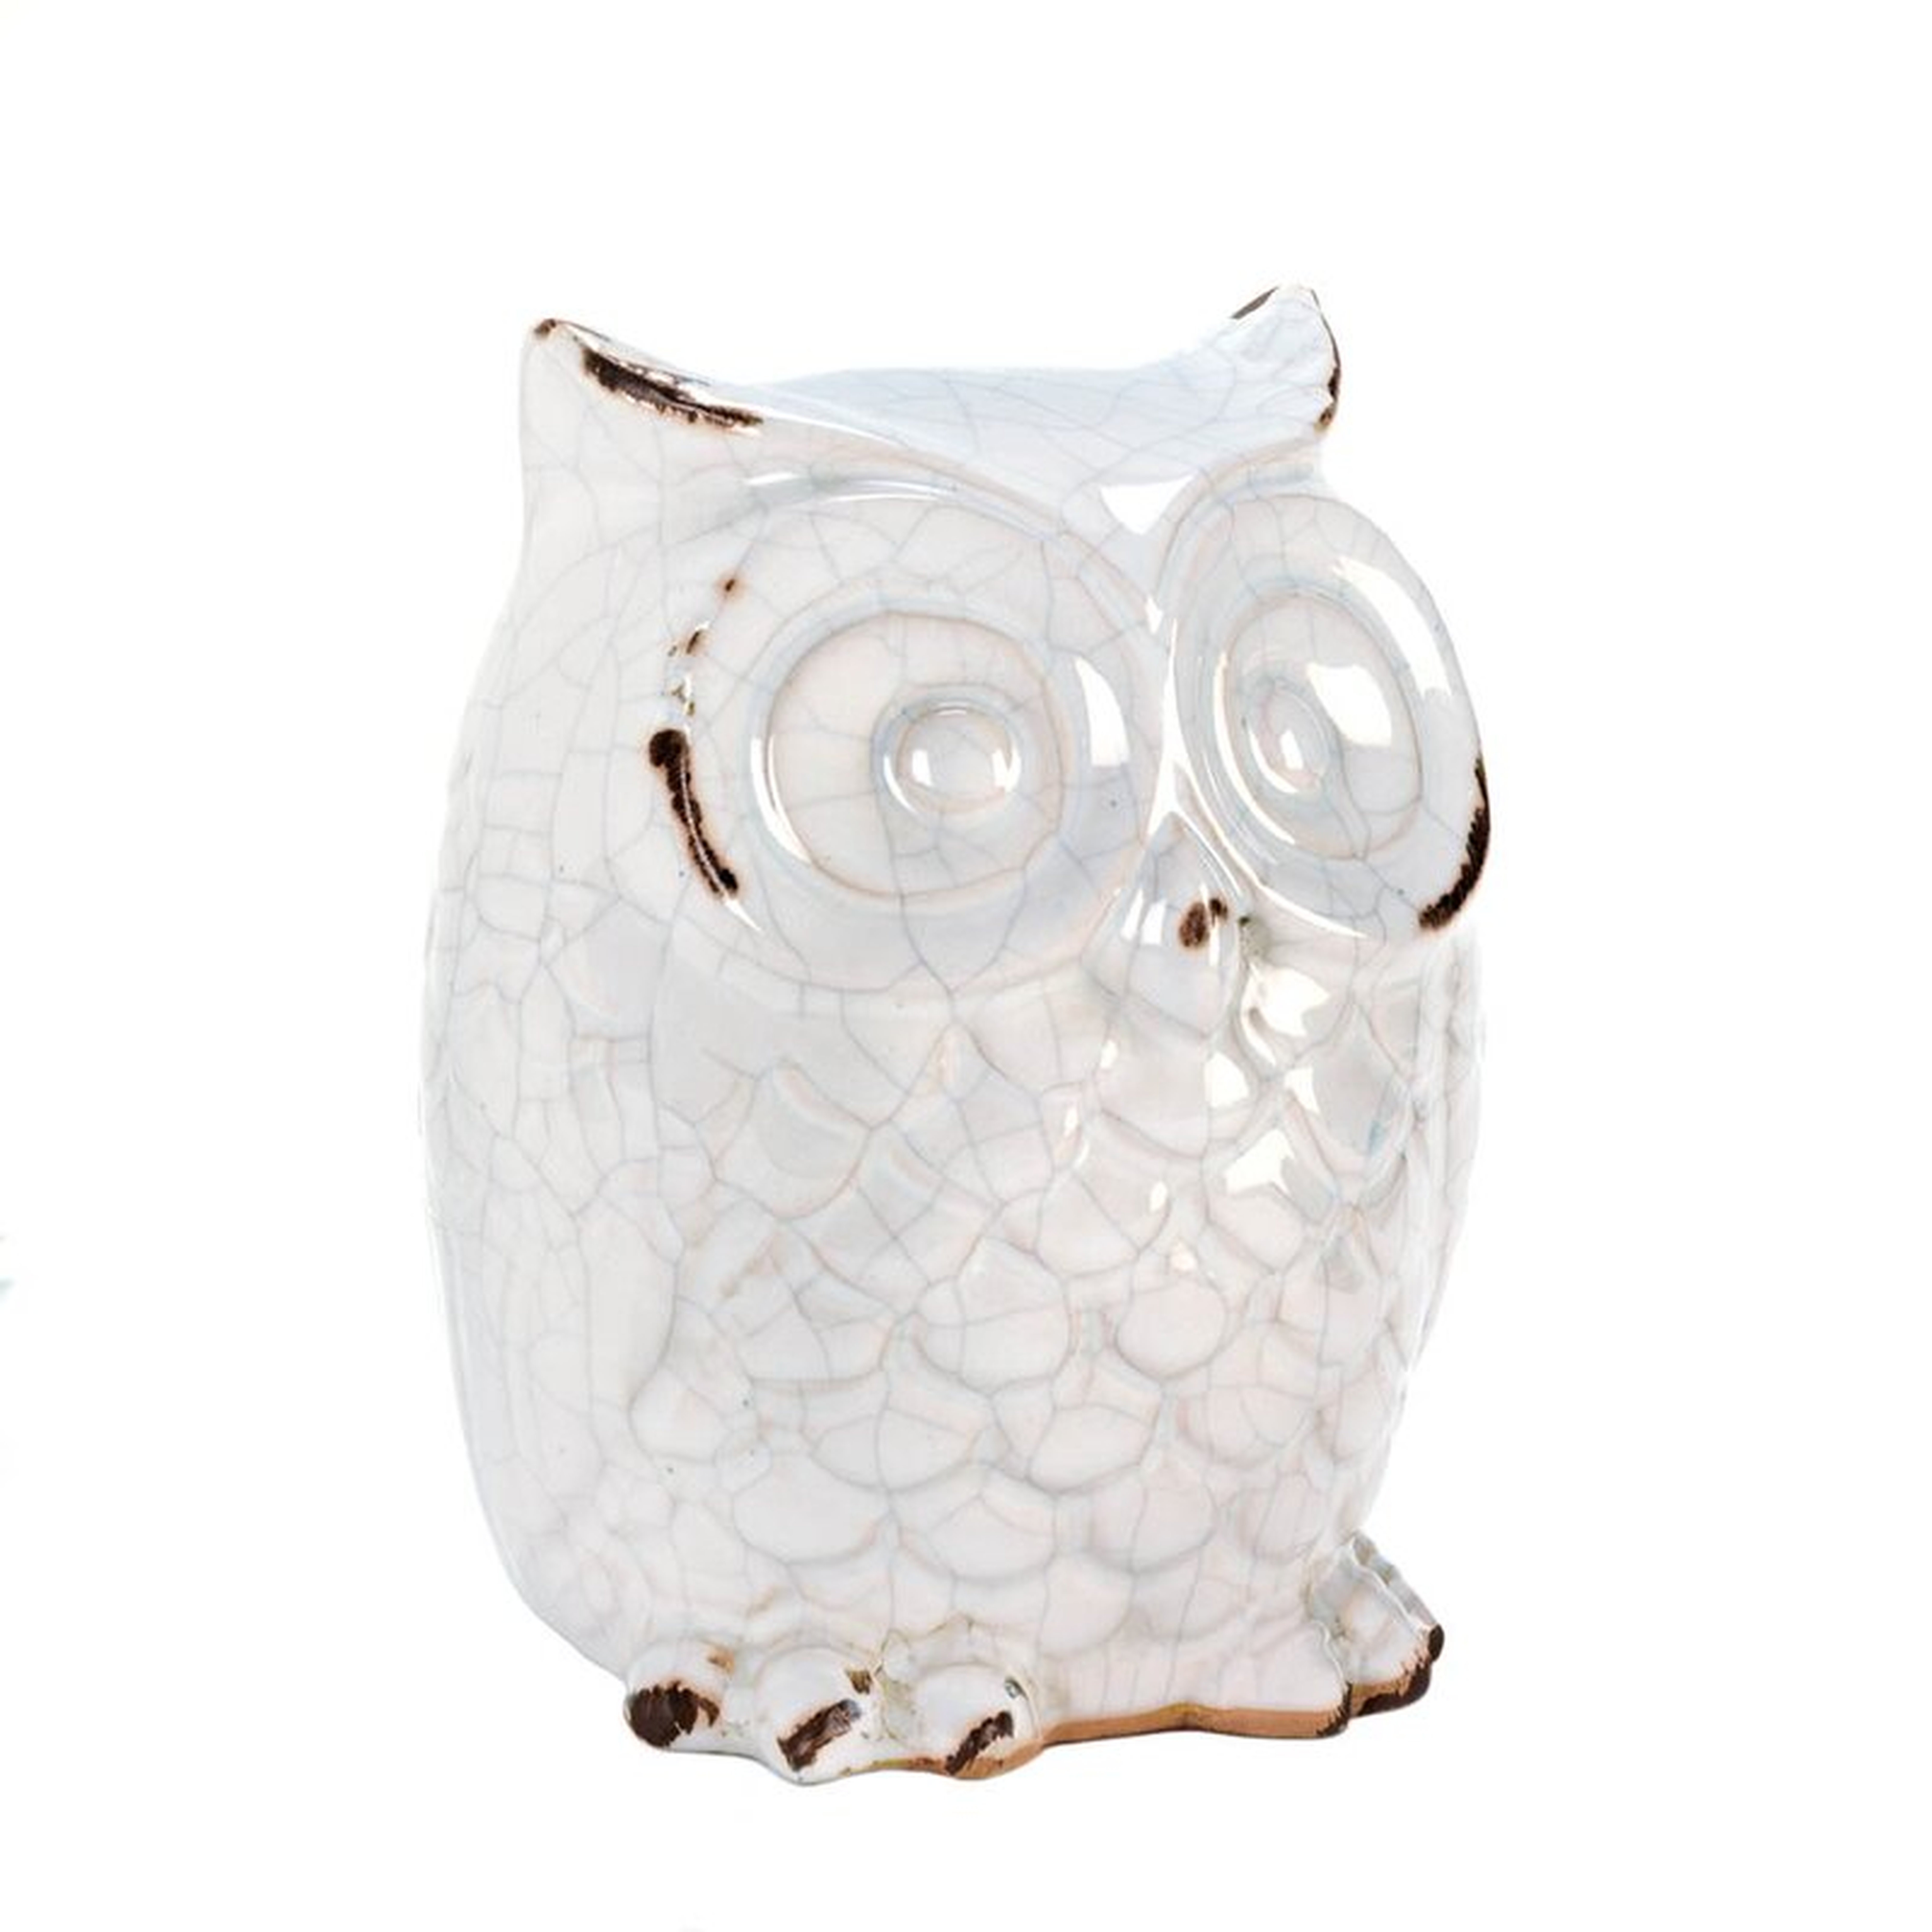 Wise Owl Decorative Figurine - Wayfair